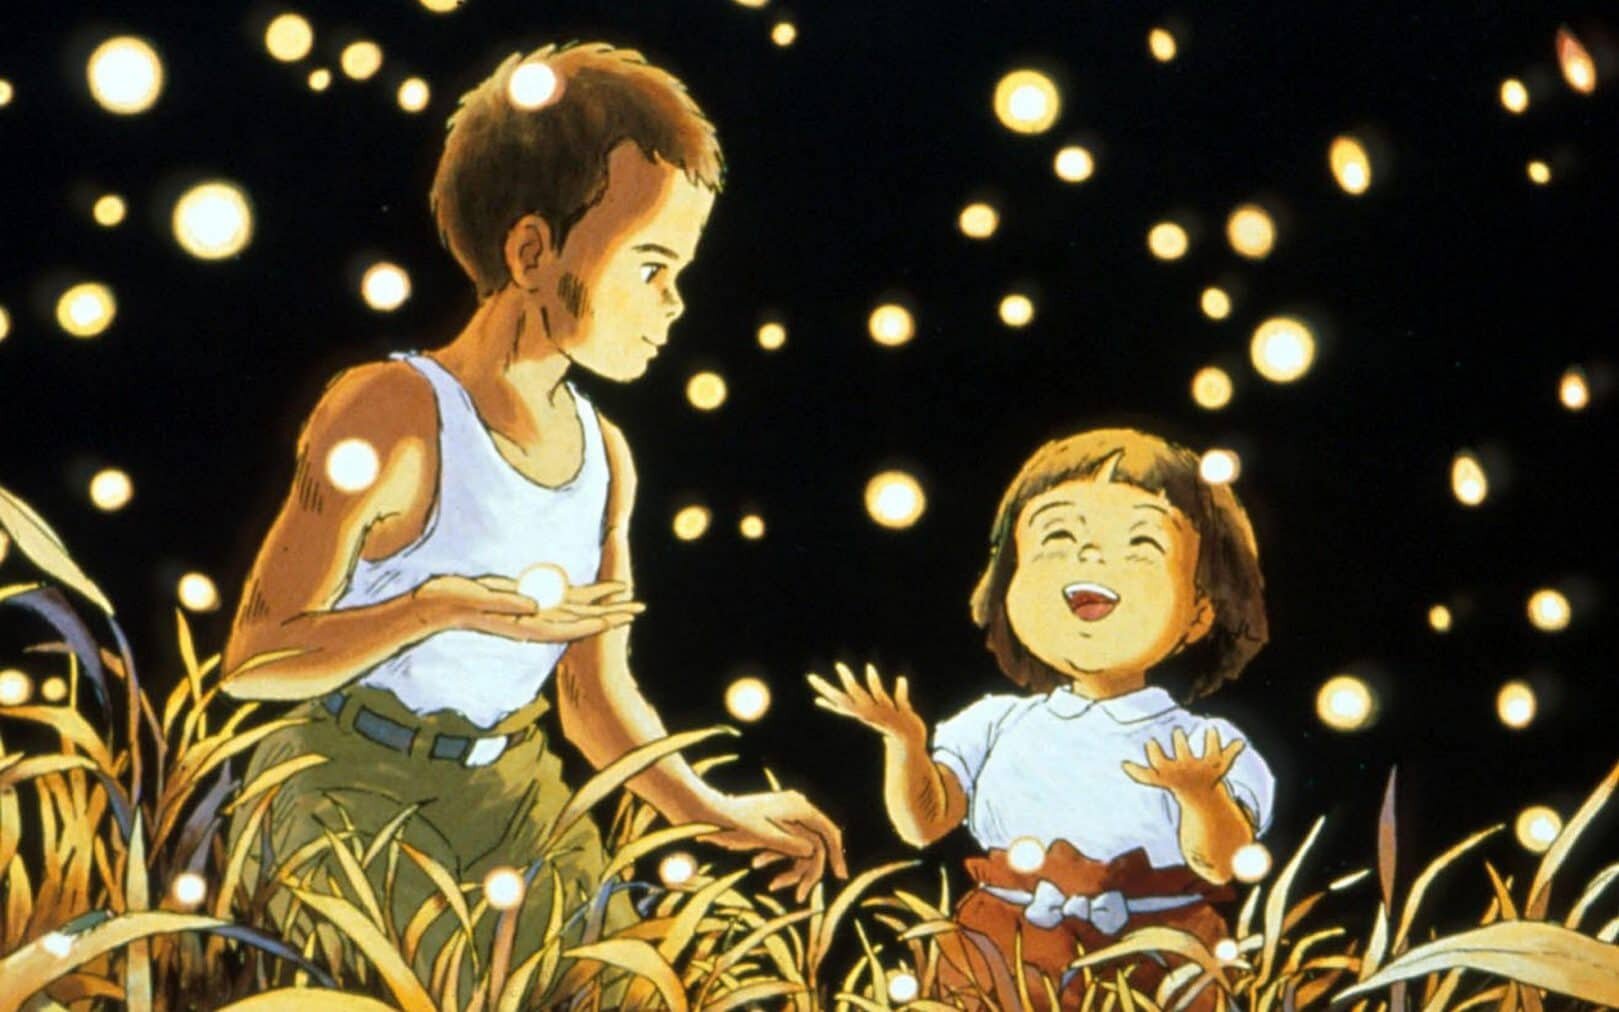 JICC  Animezing: Grave of the Fireflies